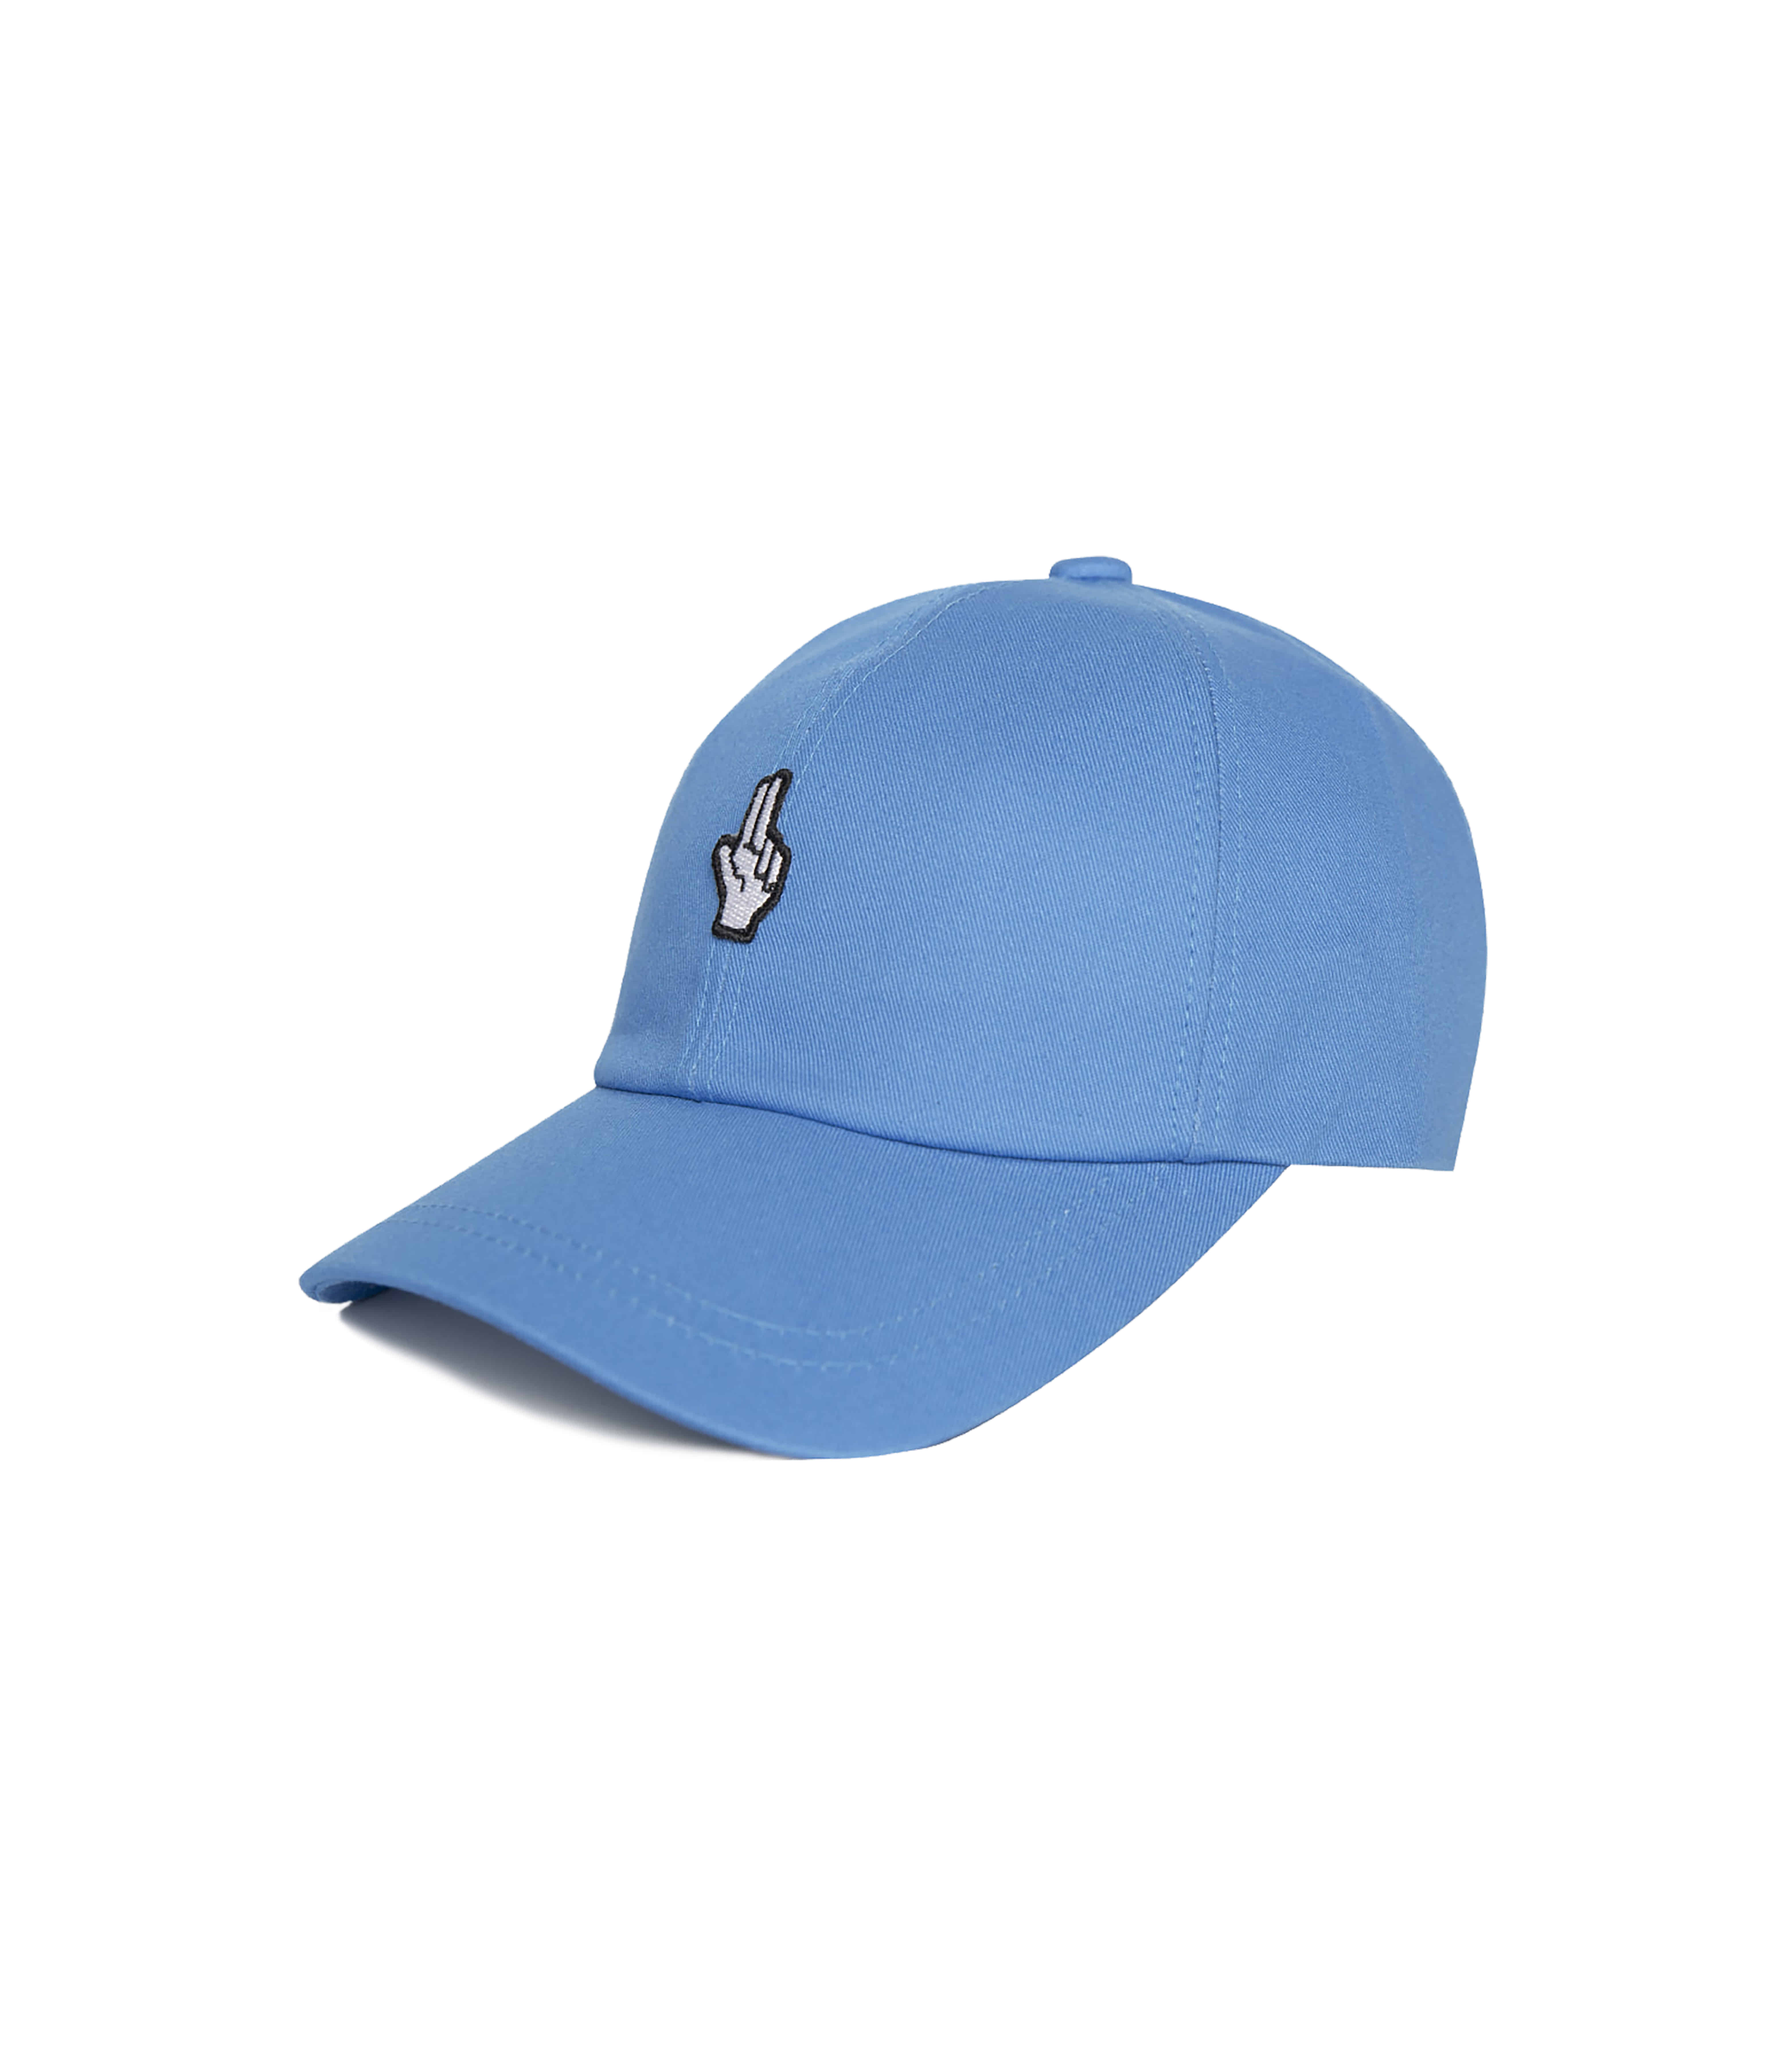 VIBRATEKIDS - SIMPLE HAND SHAKE BALL CAP (BLUE)